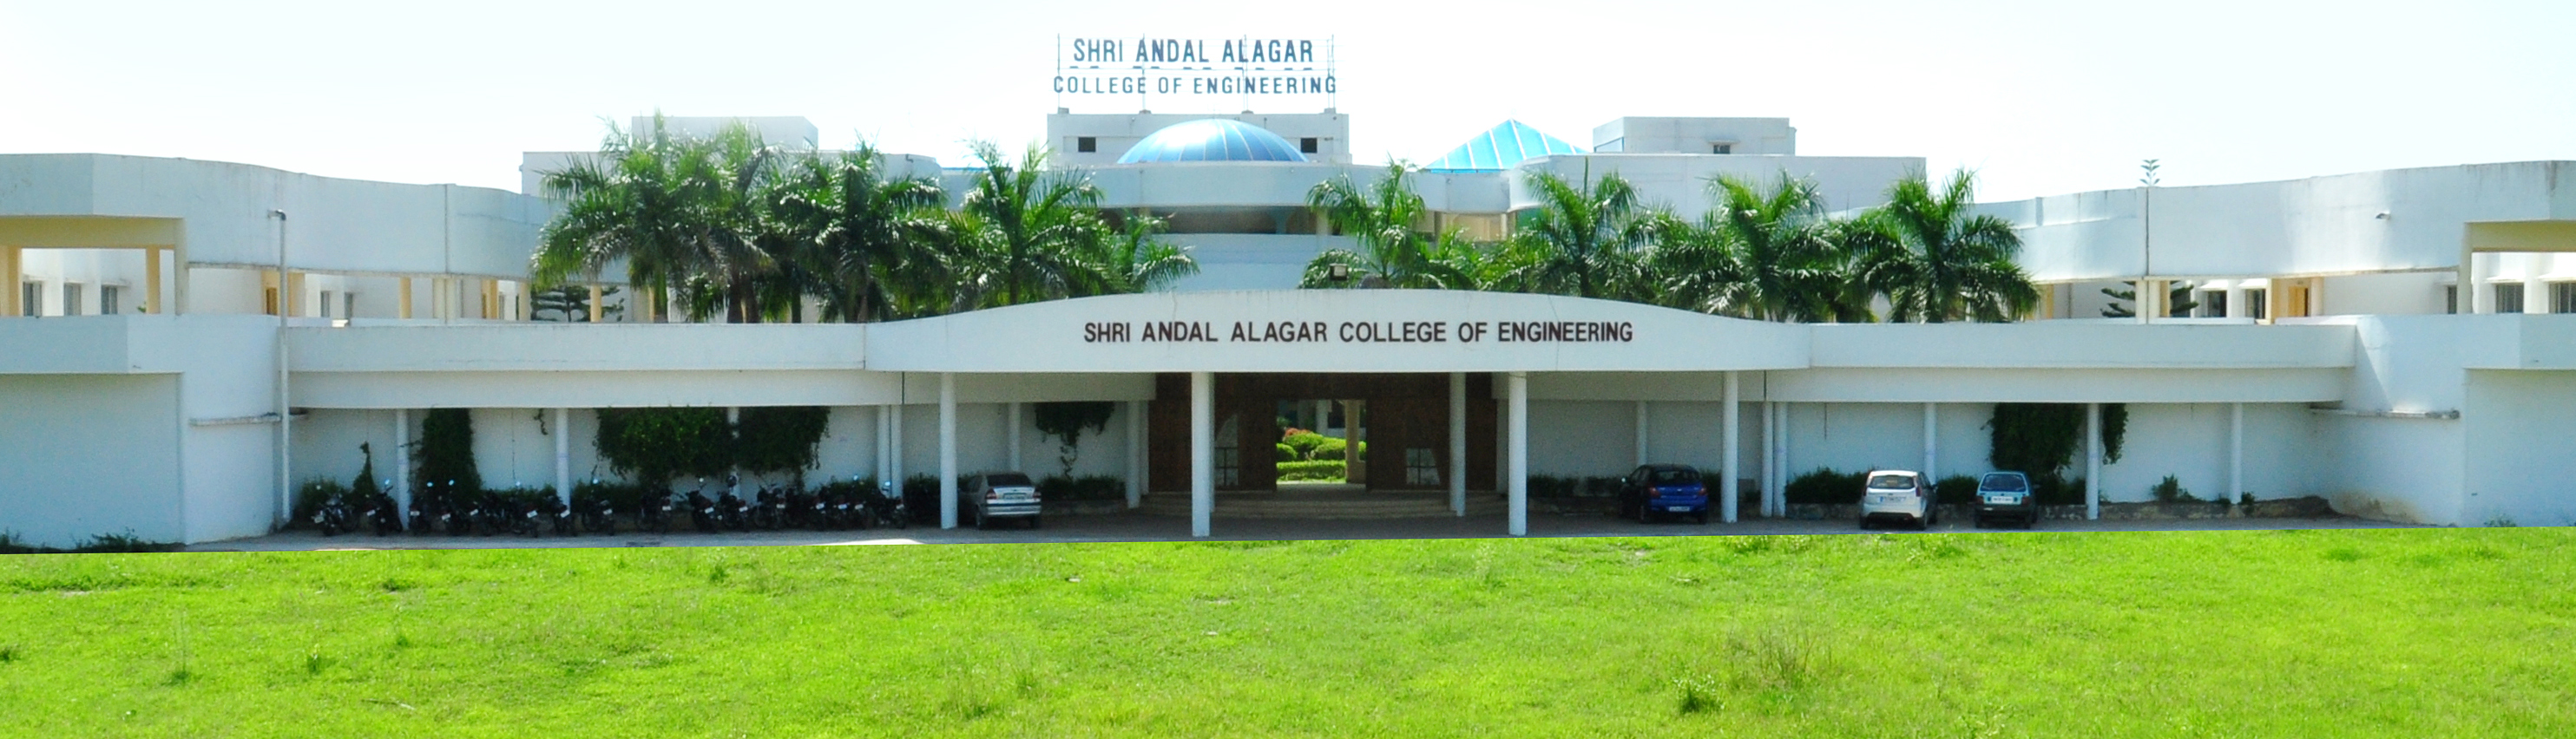 Shri Andal Alagar College of Engineering, Kanchipuram Image